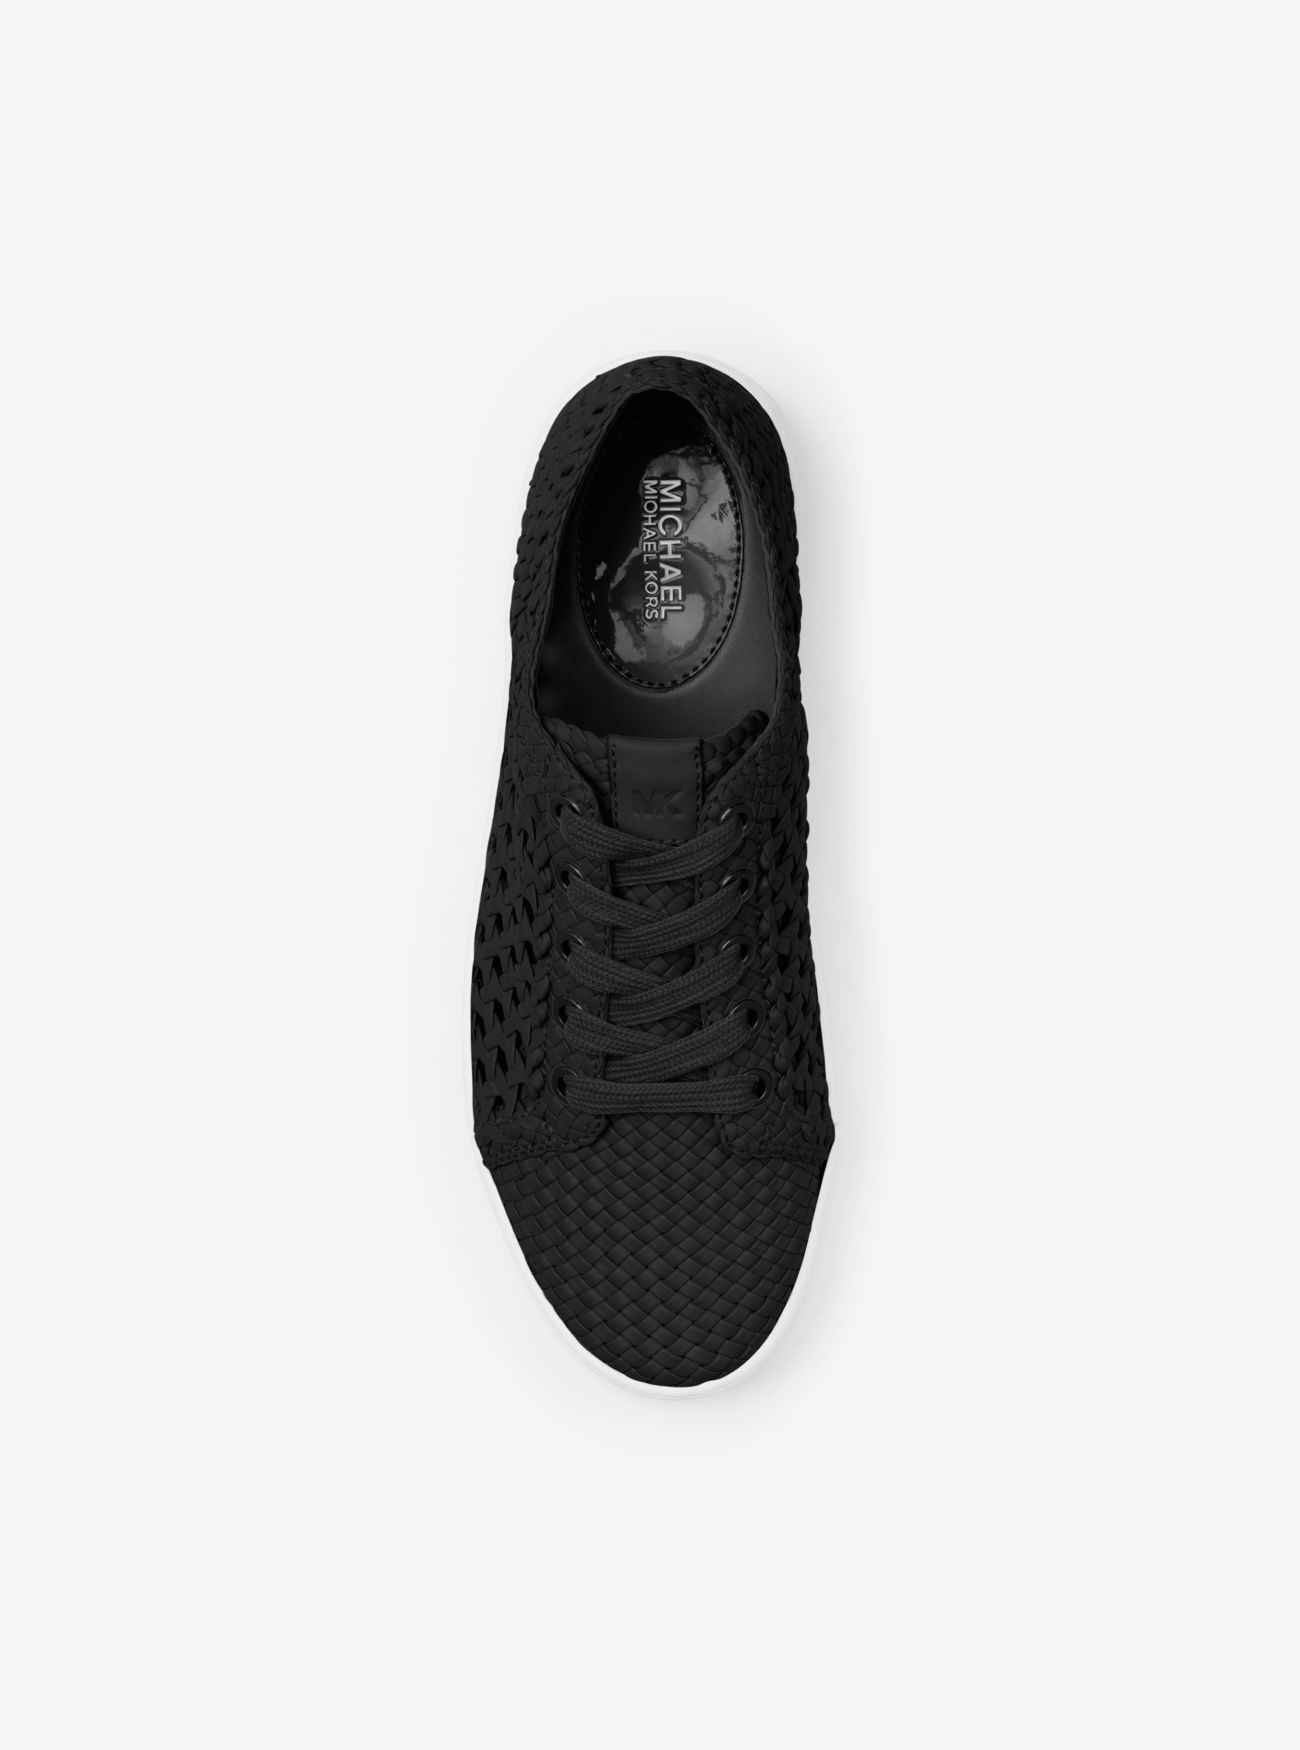 michael kors black leather sneakers